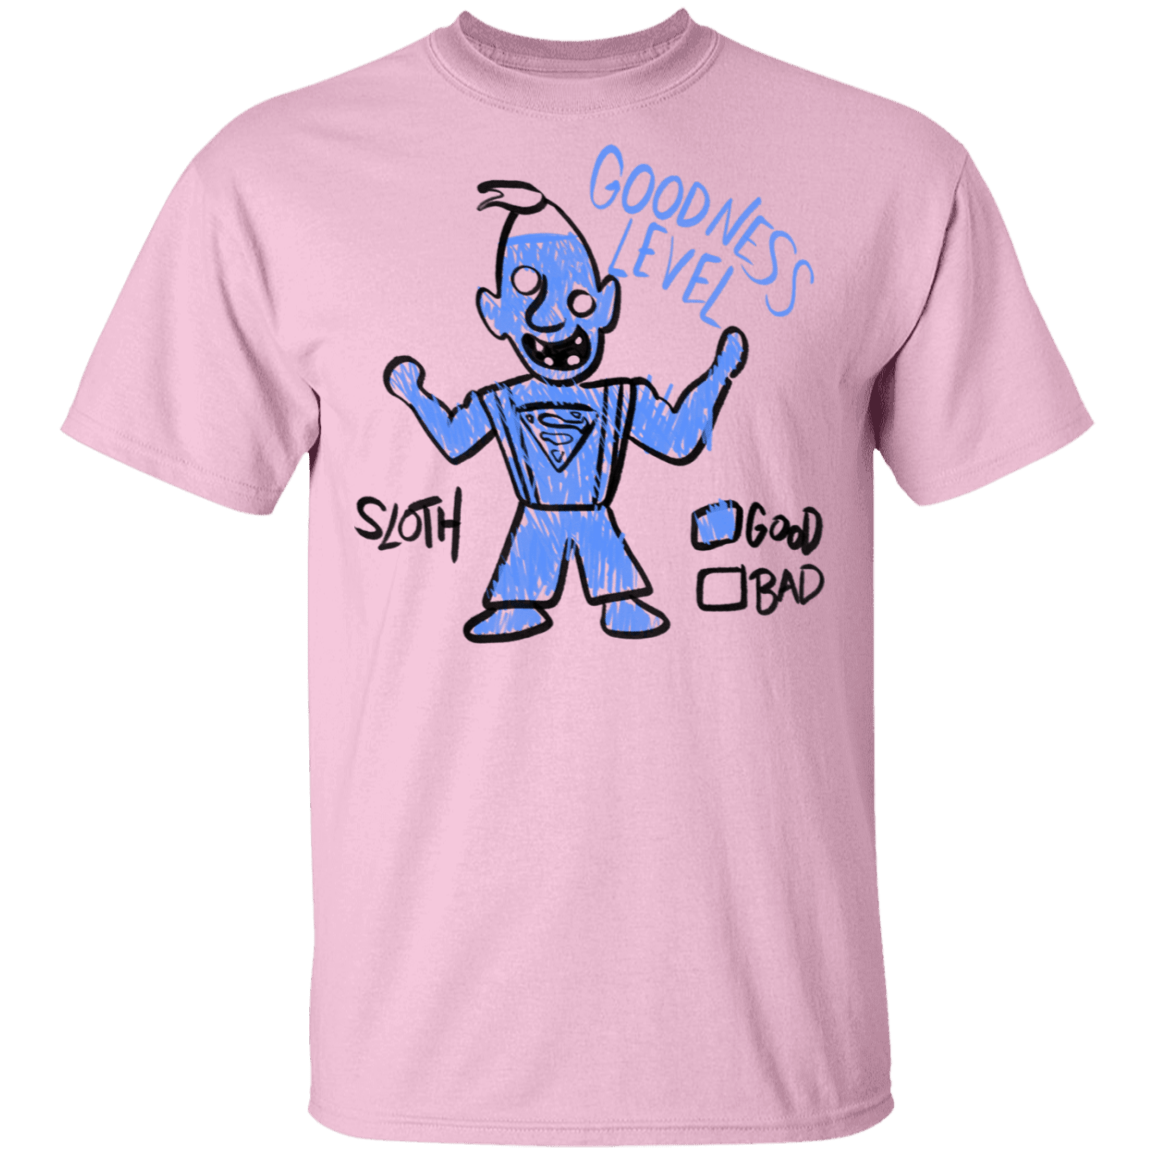 T-Shirts Light Pink / S Goodness Level T-Shirt